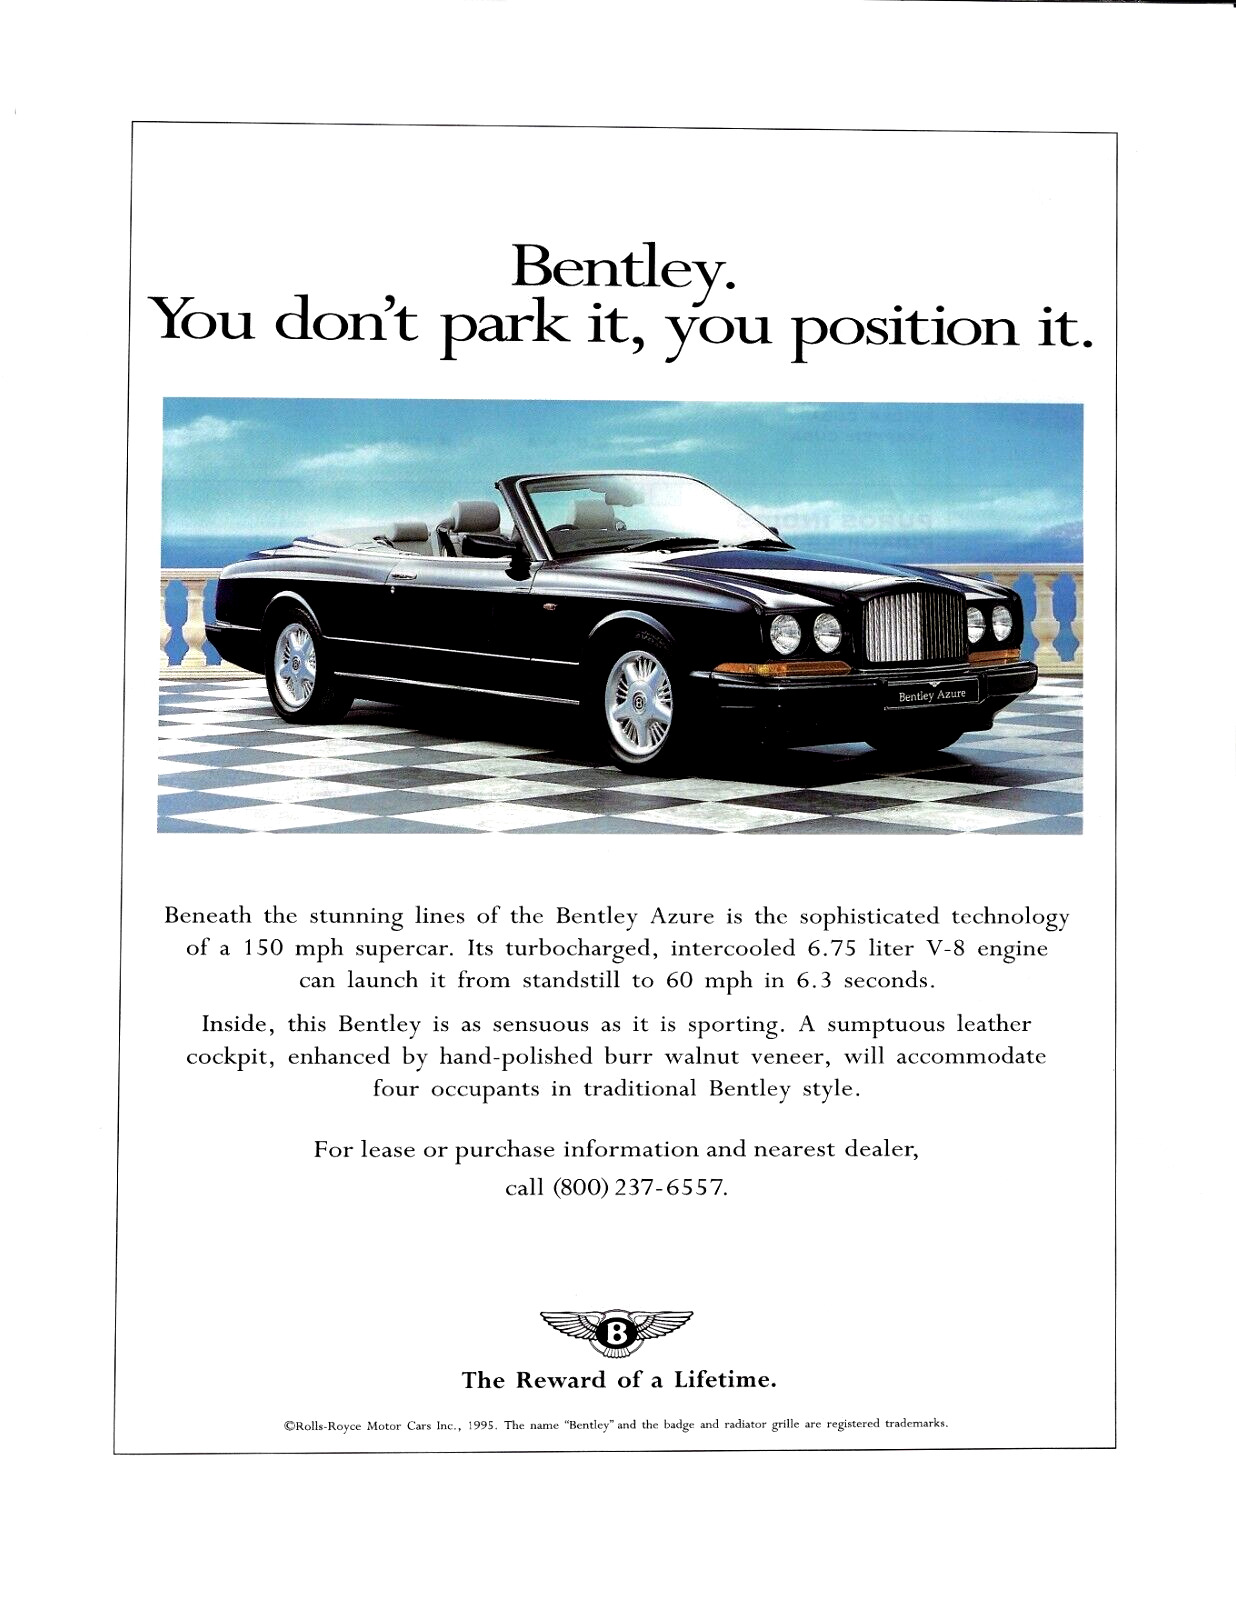 1995 Bentley Azure 6.75 Liter V-8 150mph Supercar Park It Vintage Print Ad x